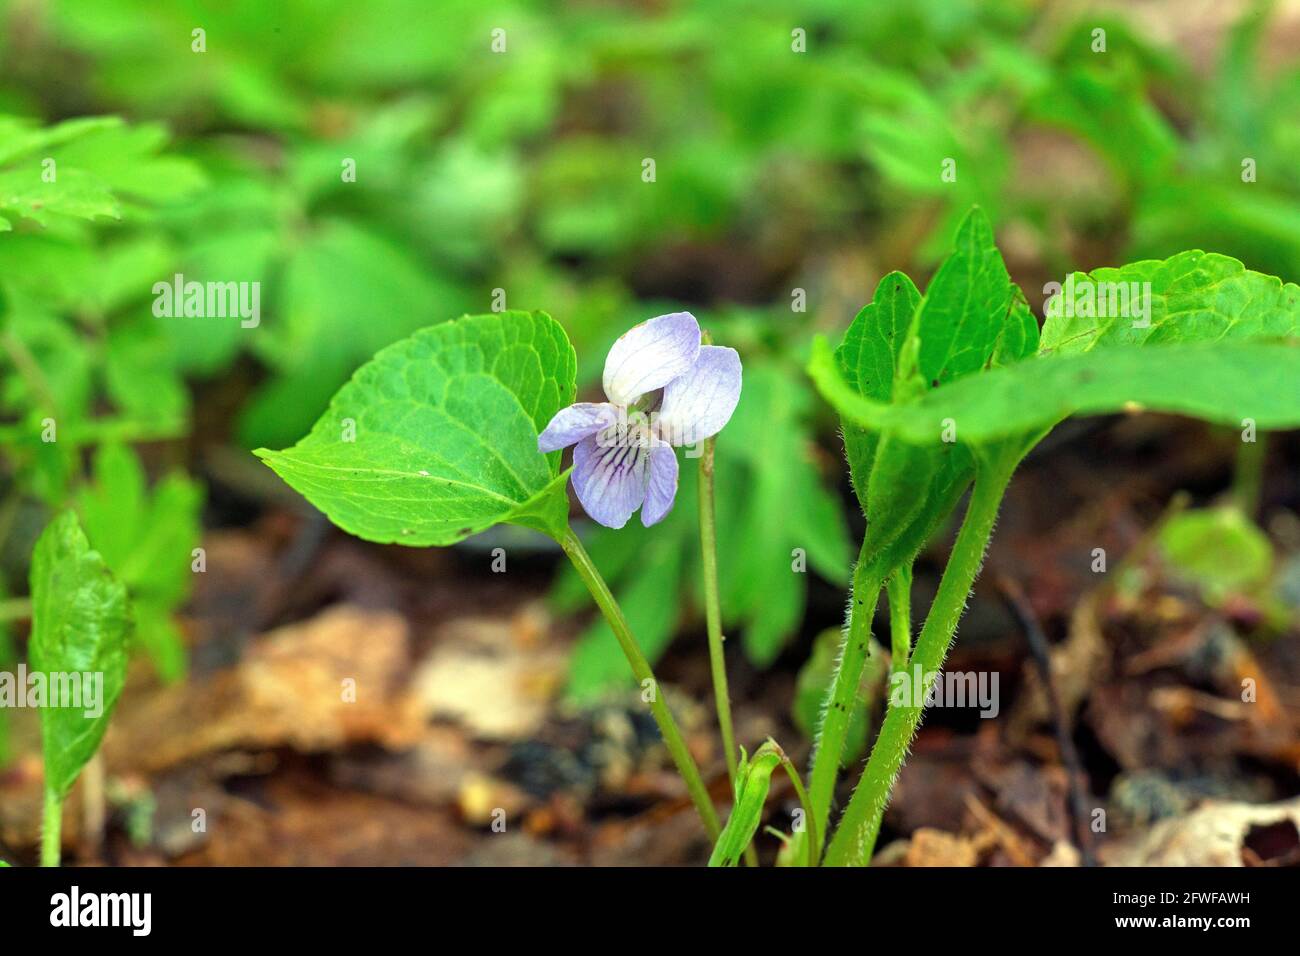 Wonder violet (Viola mirabilis) Photo: Bengt Ekman / TT / code 2706 Stock Photo